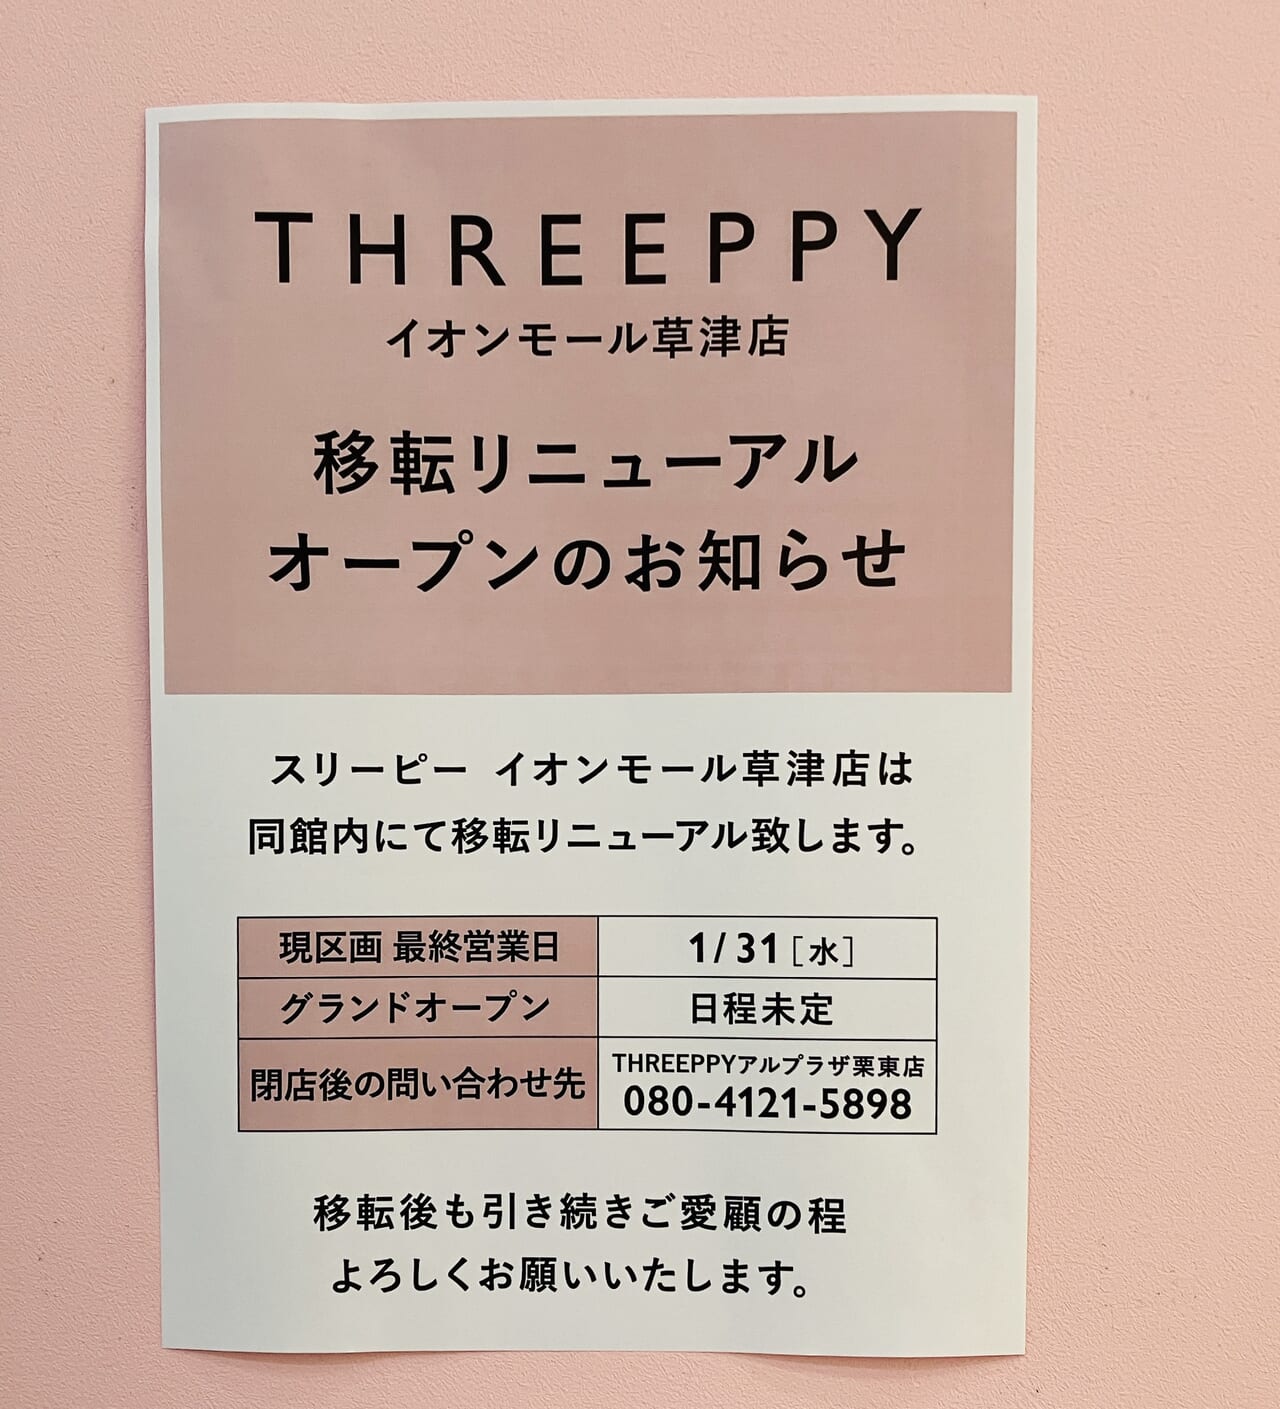 THREEPPY